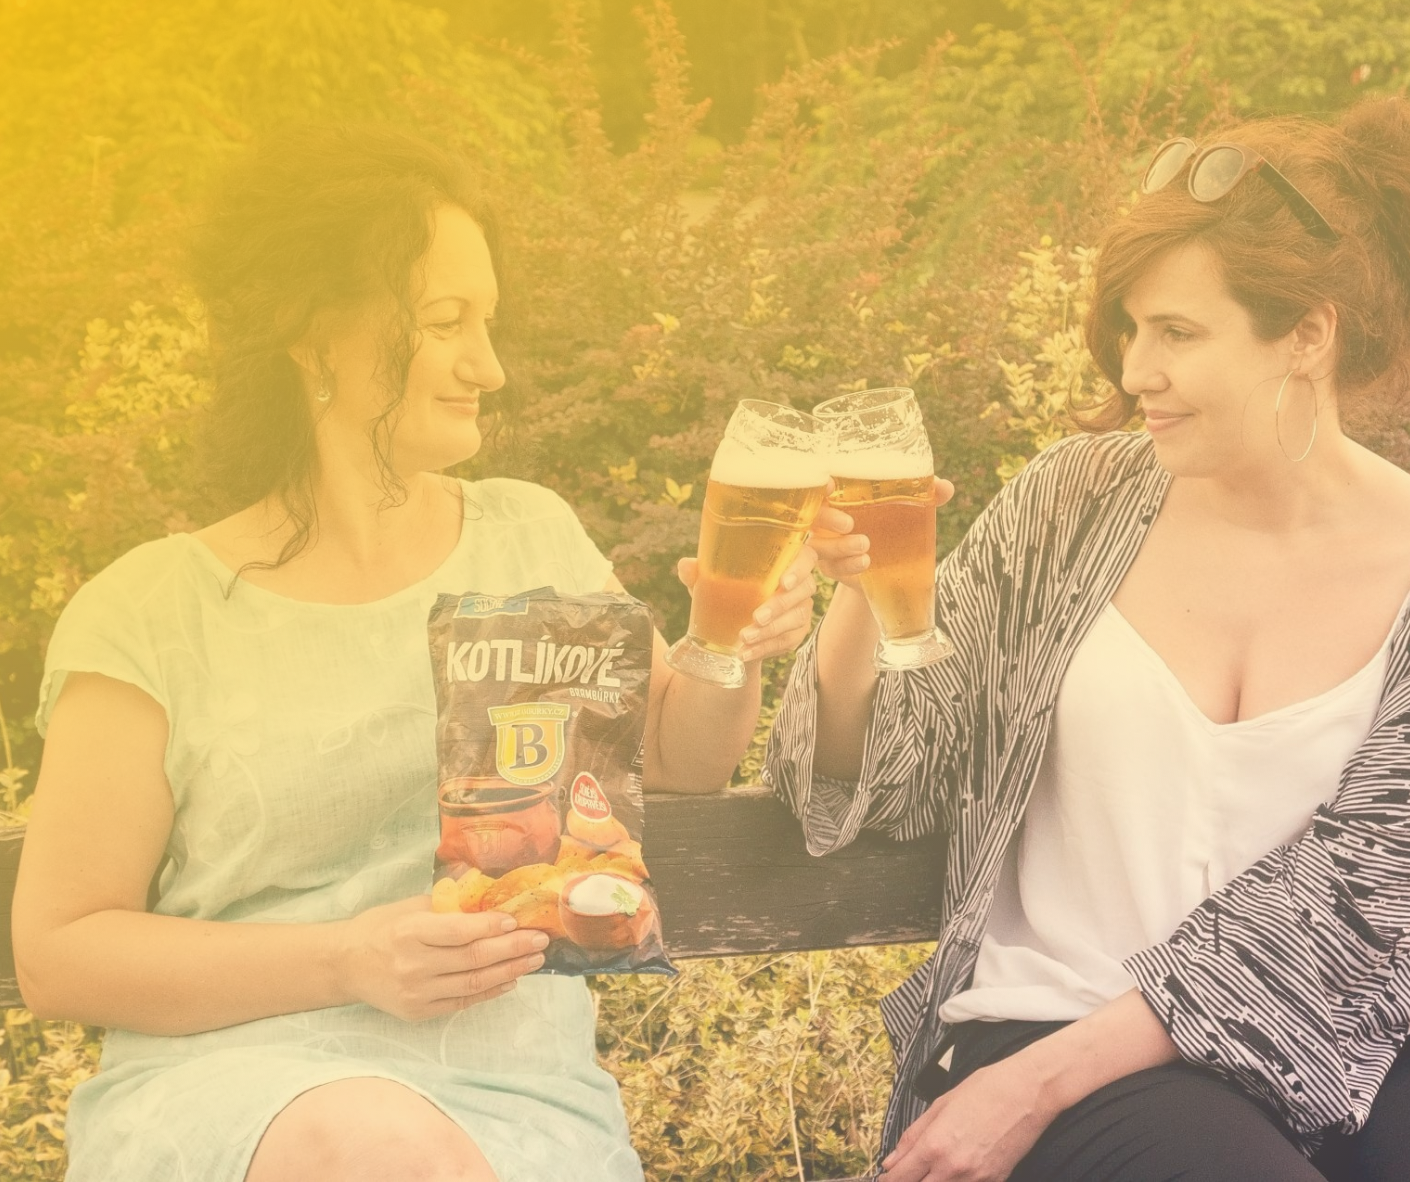 Ženy na pivě s kotlíkovými hospodskými brambůrky.